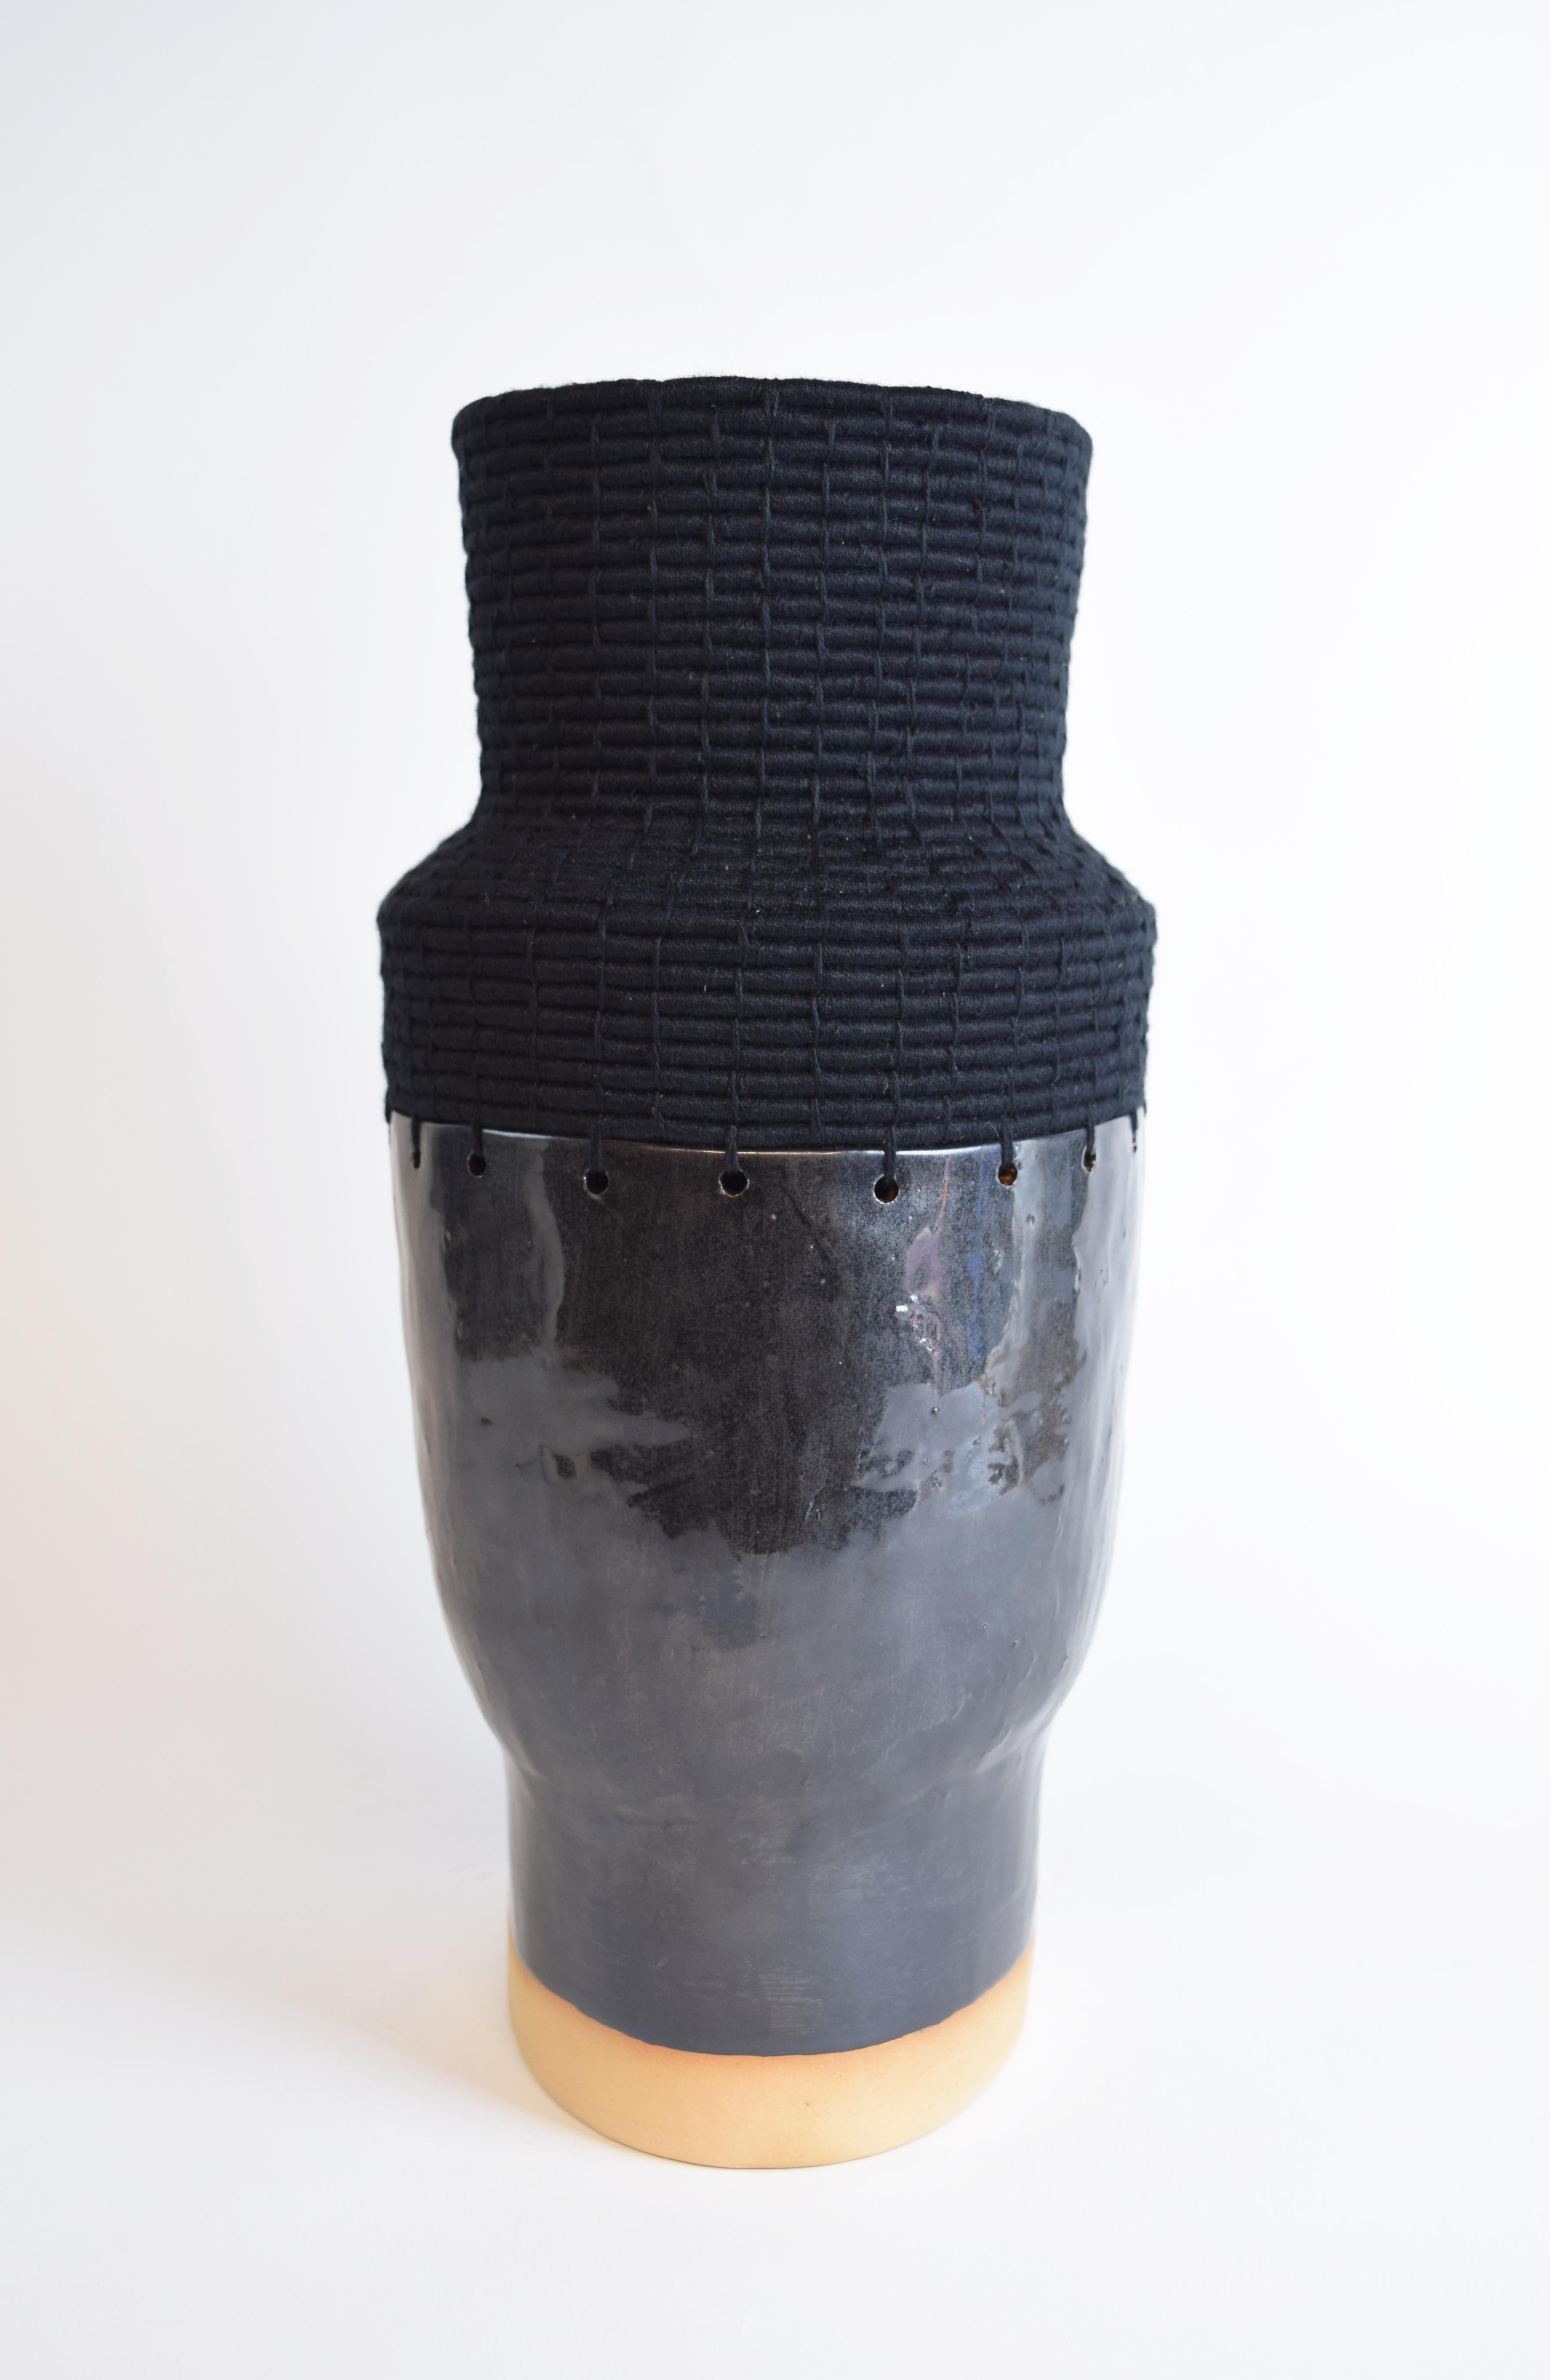 Organic Modern One of a Kind Handmade Ceramic Vessel #783, Black Glaze, Woven Black Cotton